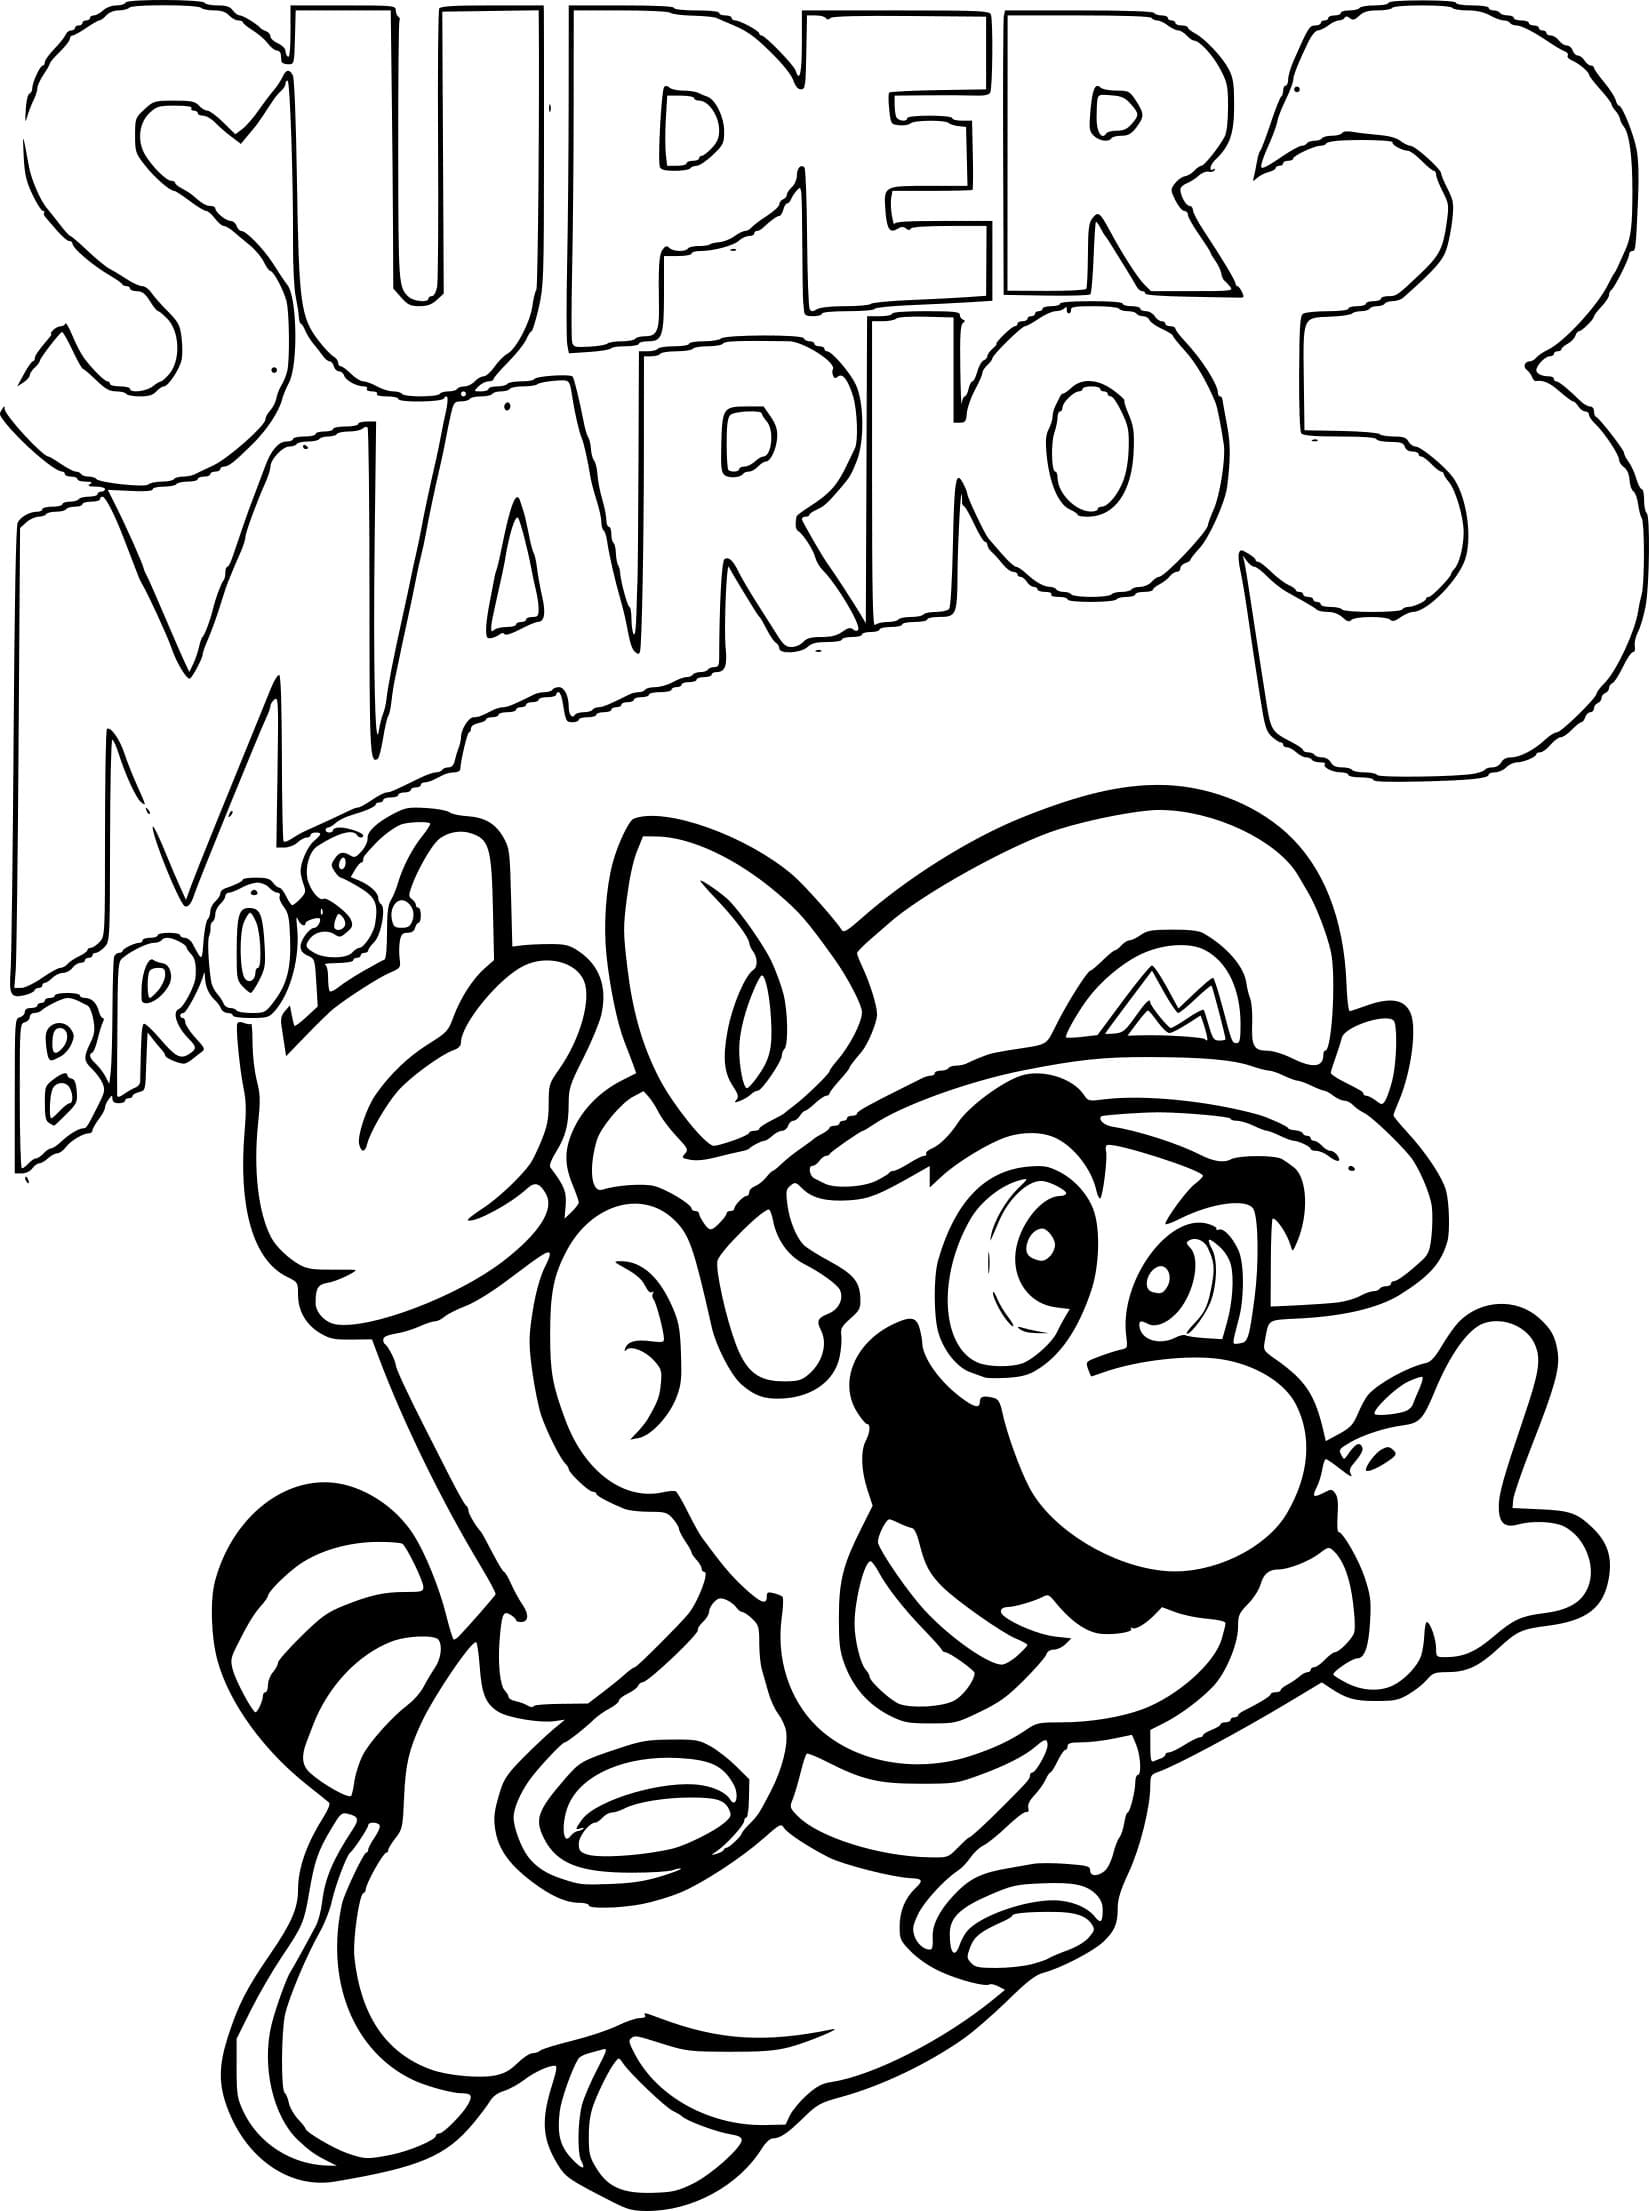 Kolorowanki Super Mario 26 Super Mario do wydrukowania i pokolorowania